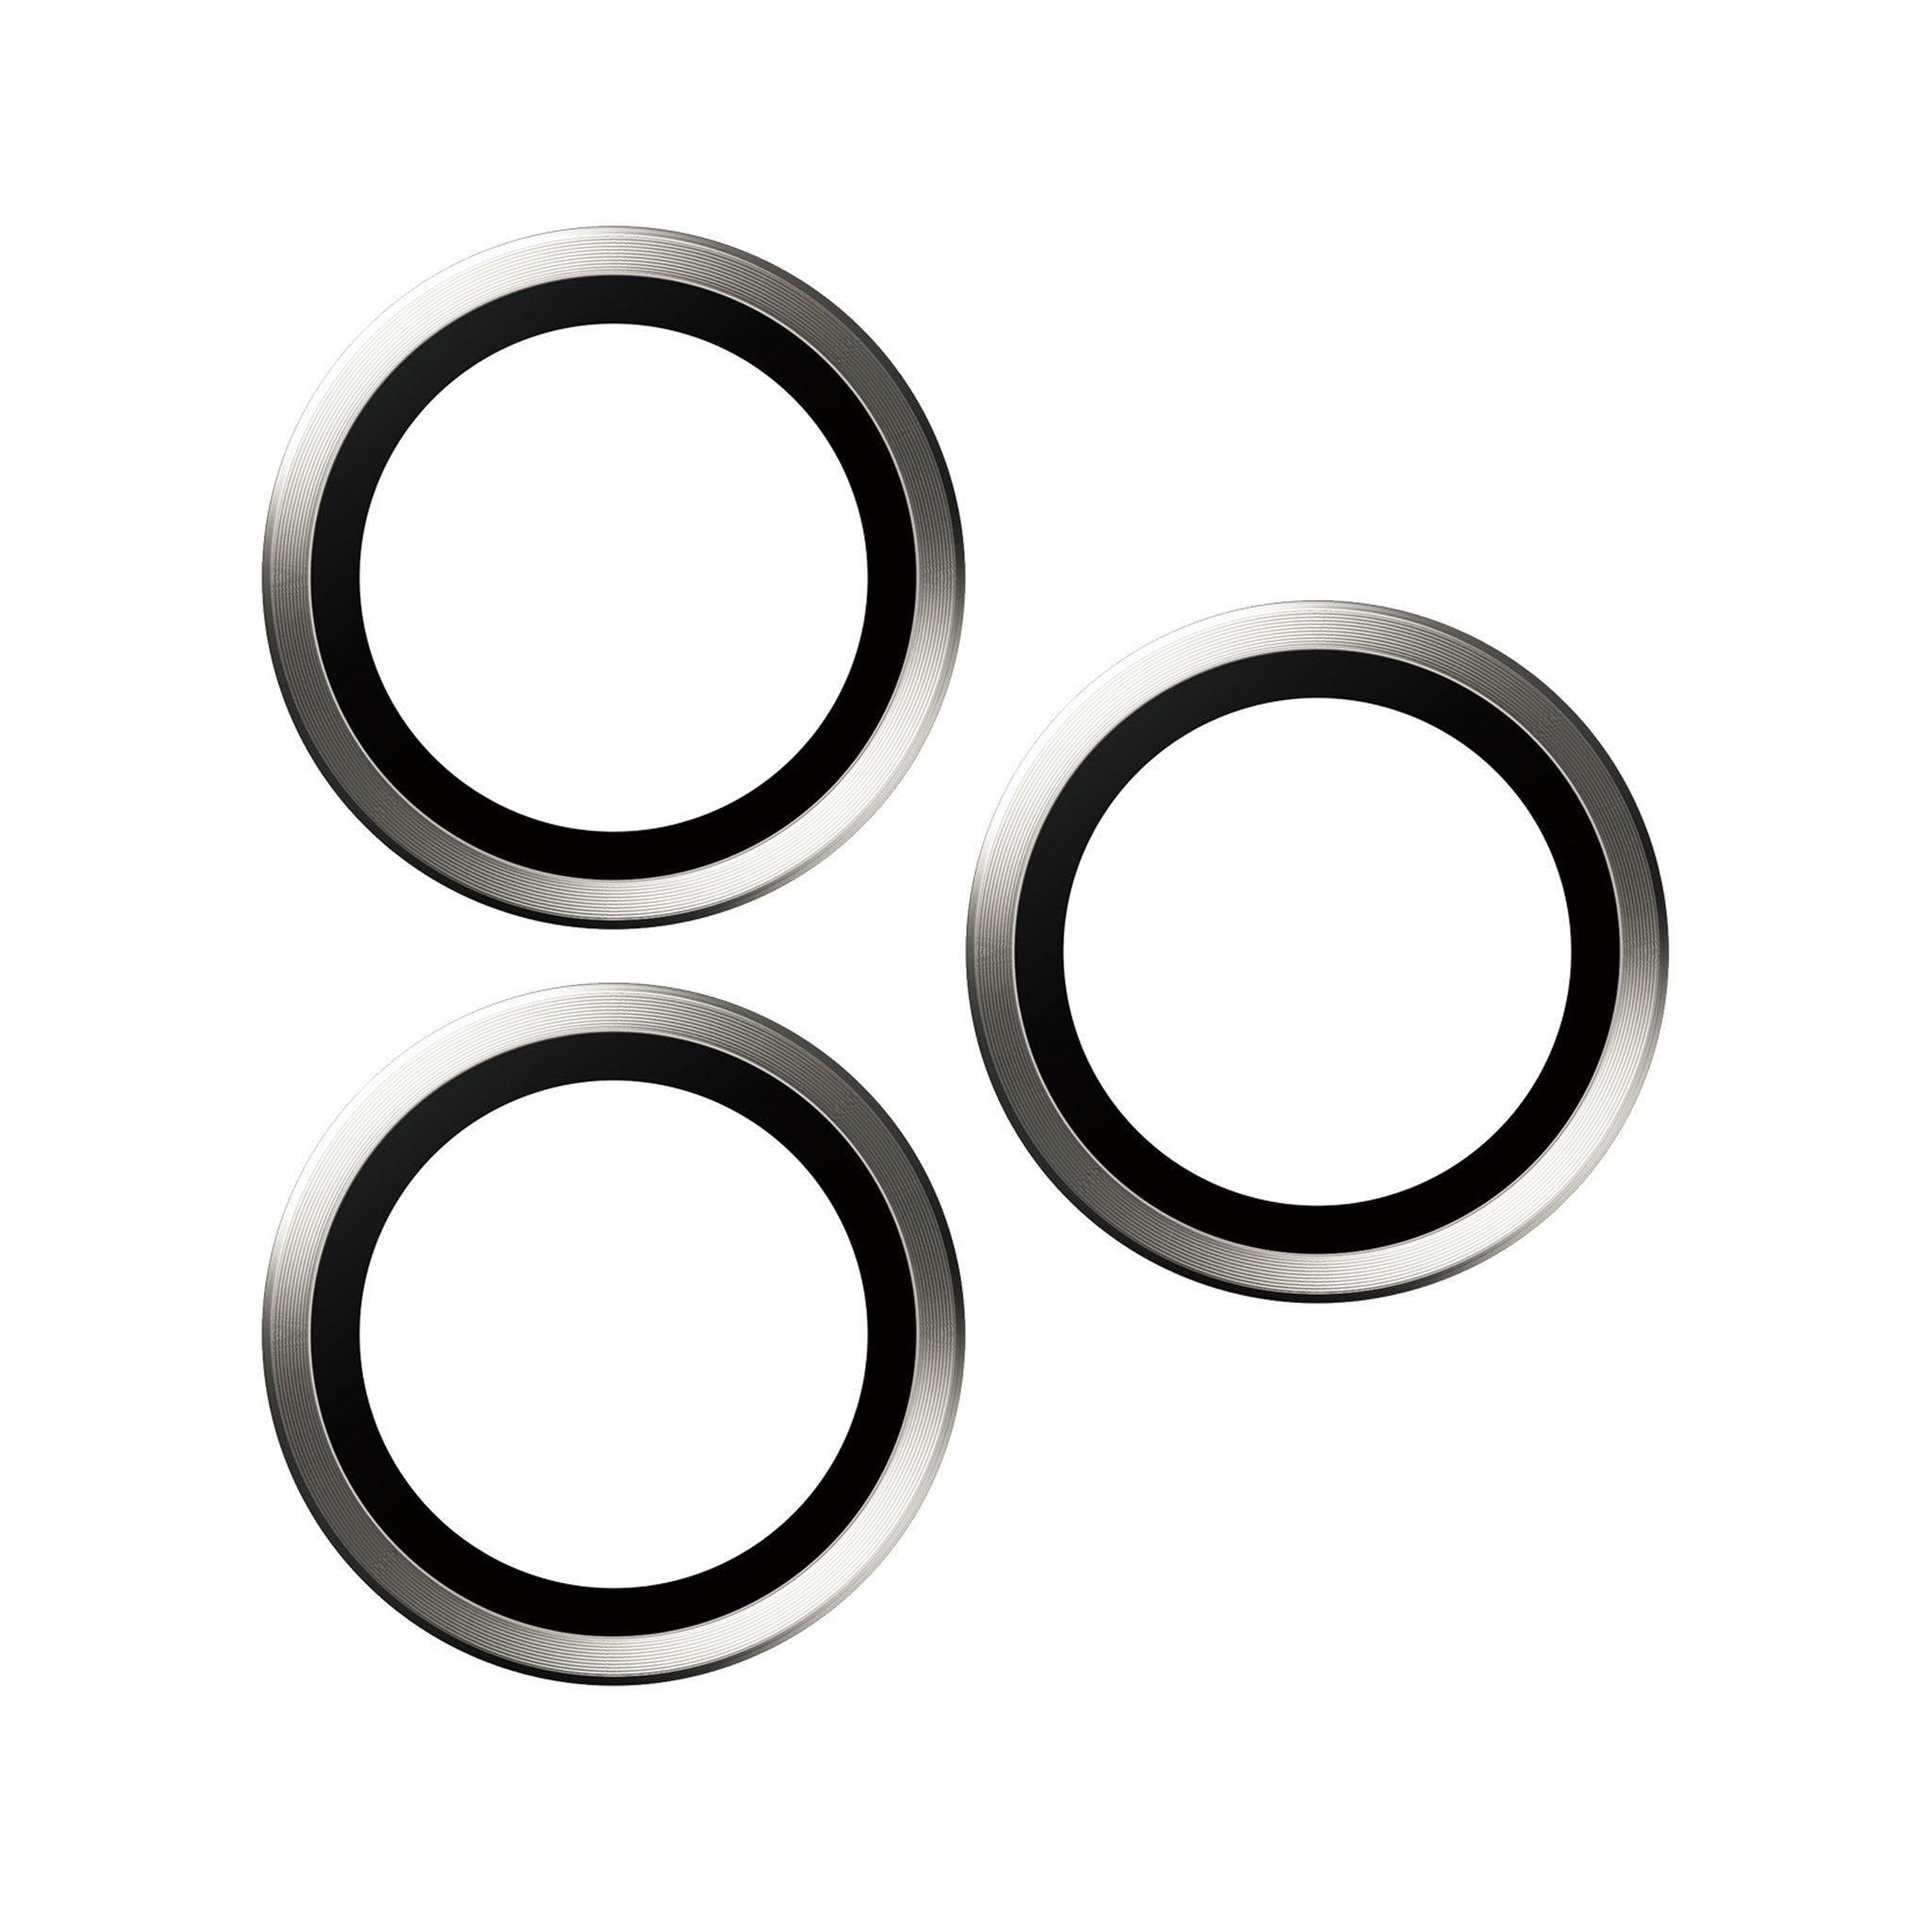 PANZERGLASS Hoops™ | Weißes Kameraschutz(für Max) 15 | Pro iPhone Metall Kameraschutz Apple Pro 15